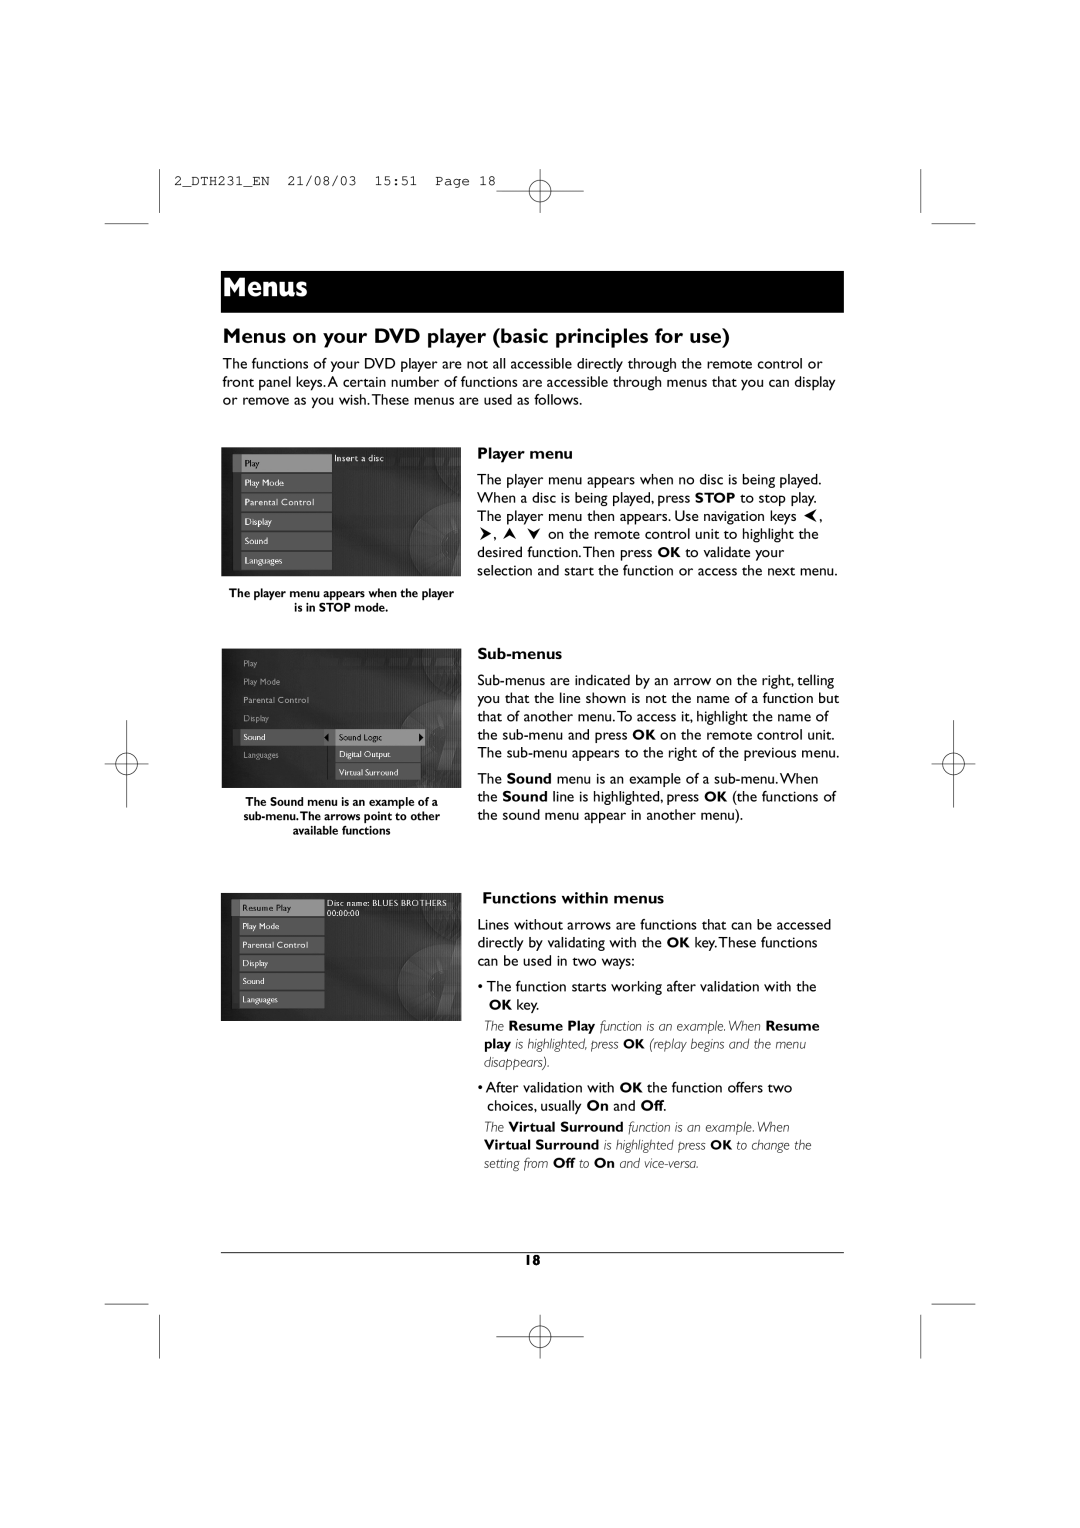 Technicolor - Thomson DTH231 manual Menus on your DVD player basic principles for use, Player menu, Sub-menus 